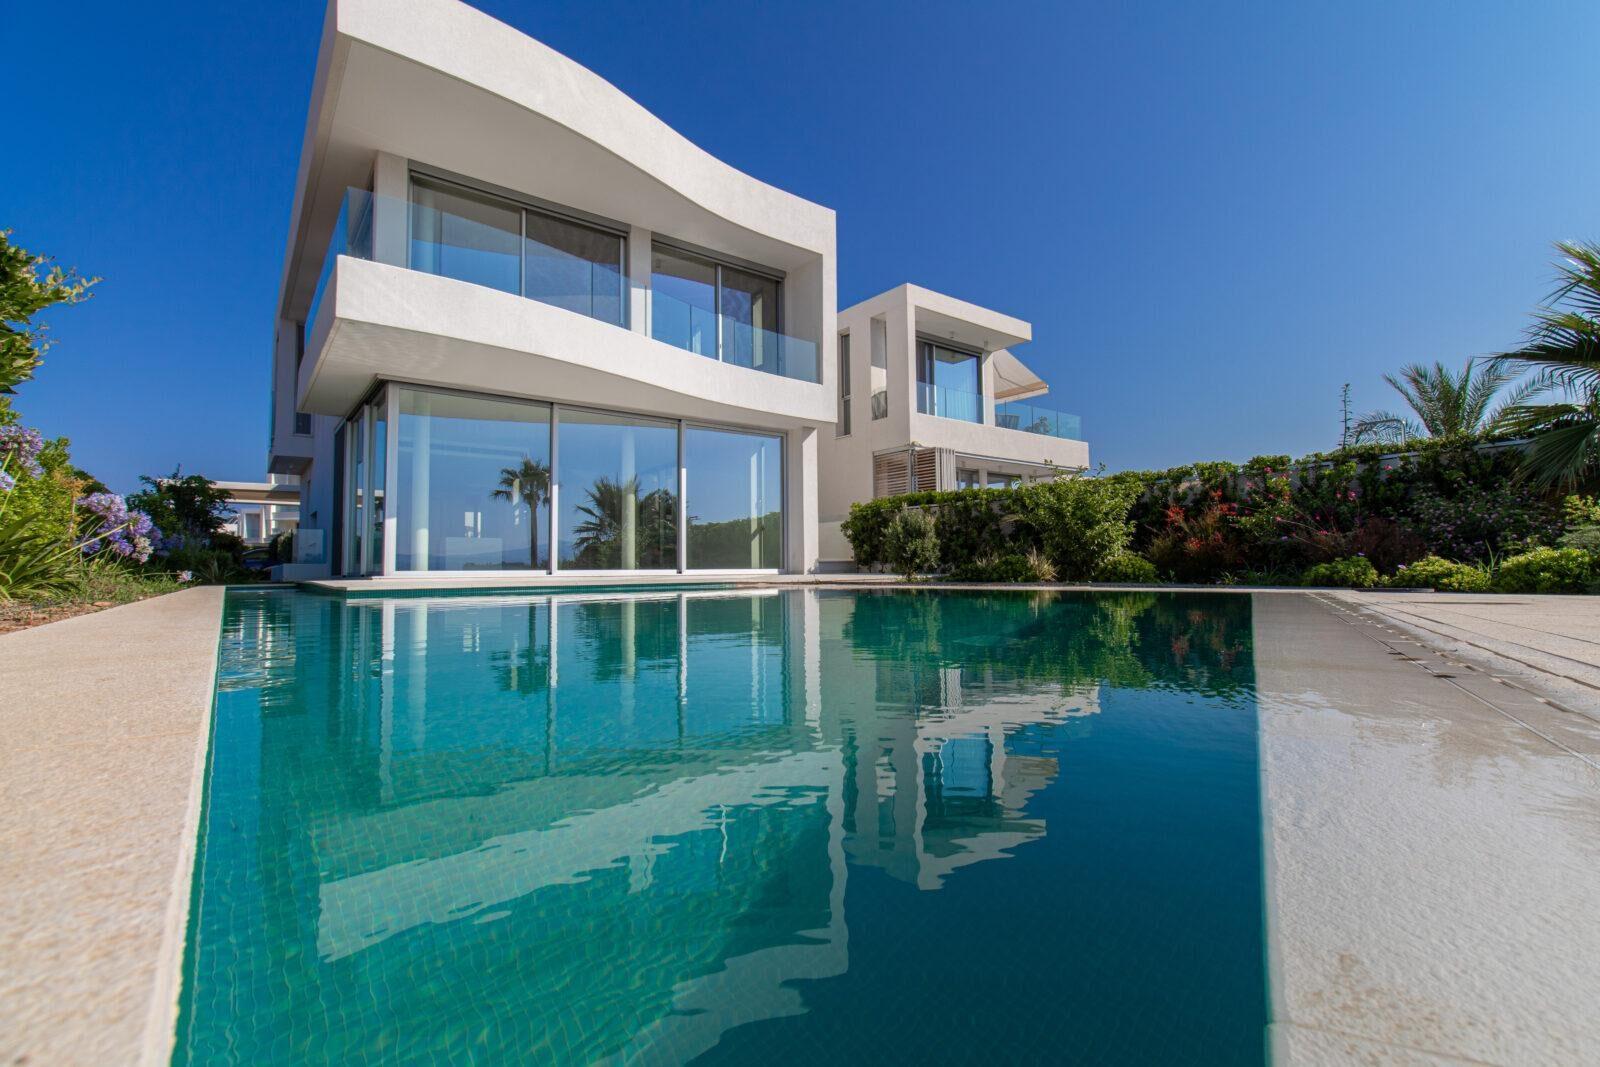 Villas for sale in Paphos, Cyprus